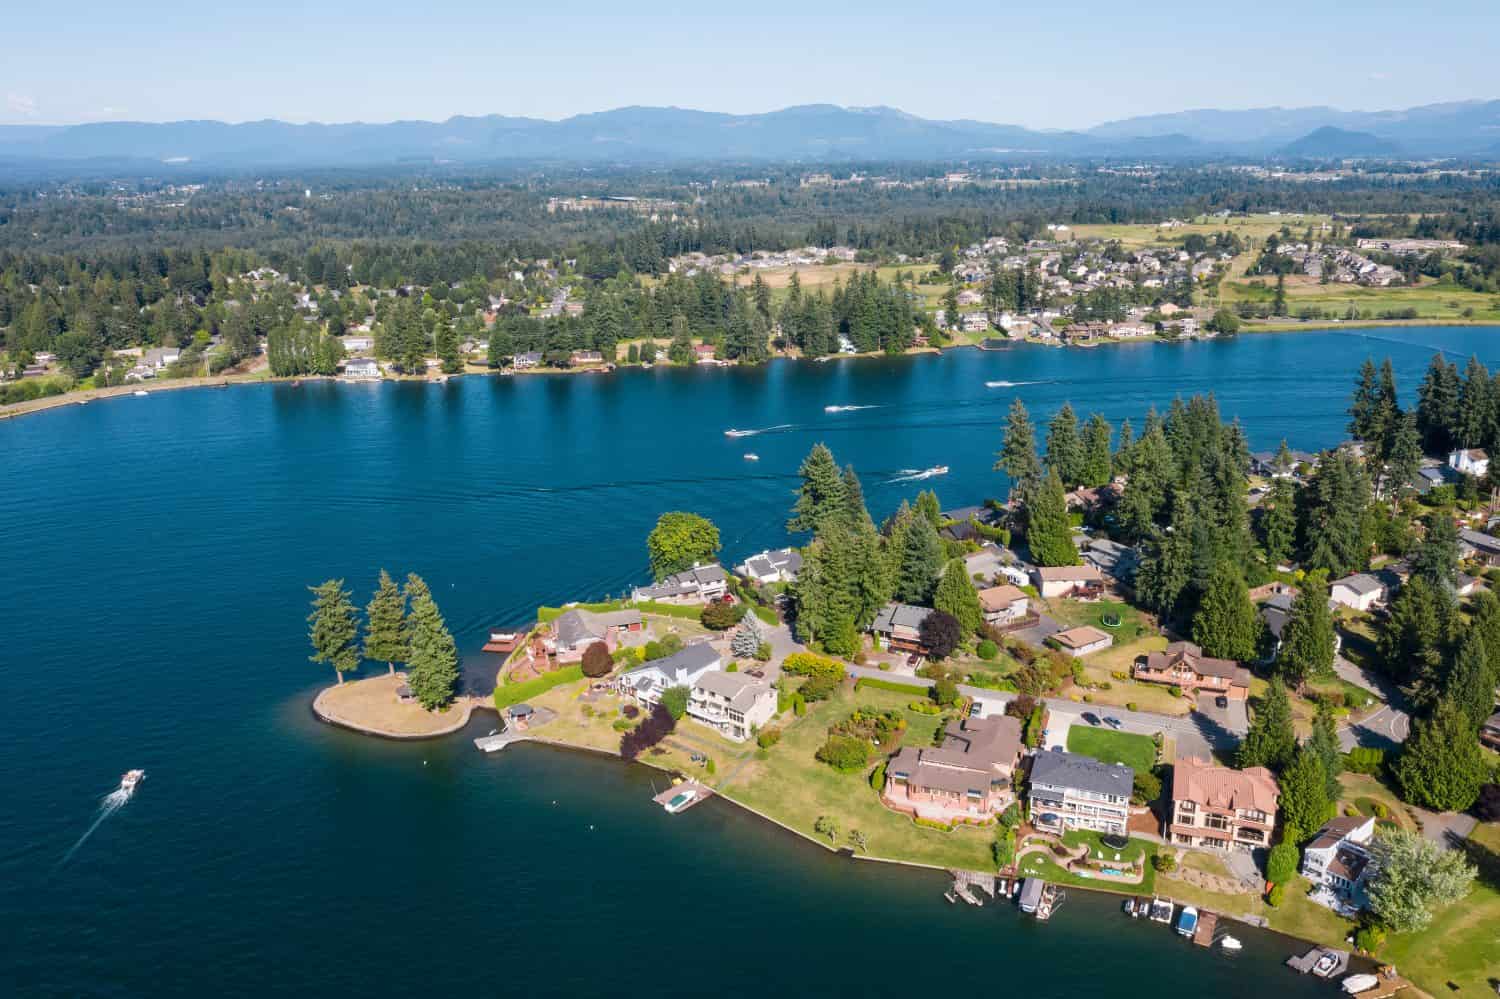 USA, Washington State, Lake Tapps. Waterfront homes and boat in lake.